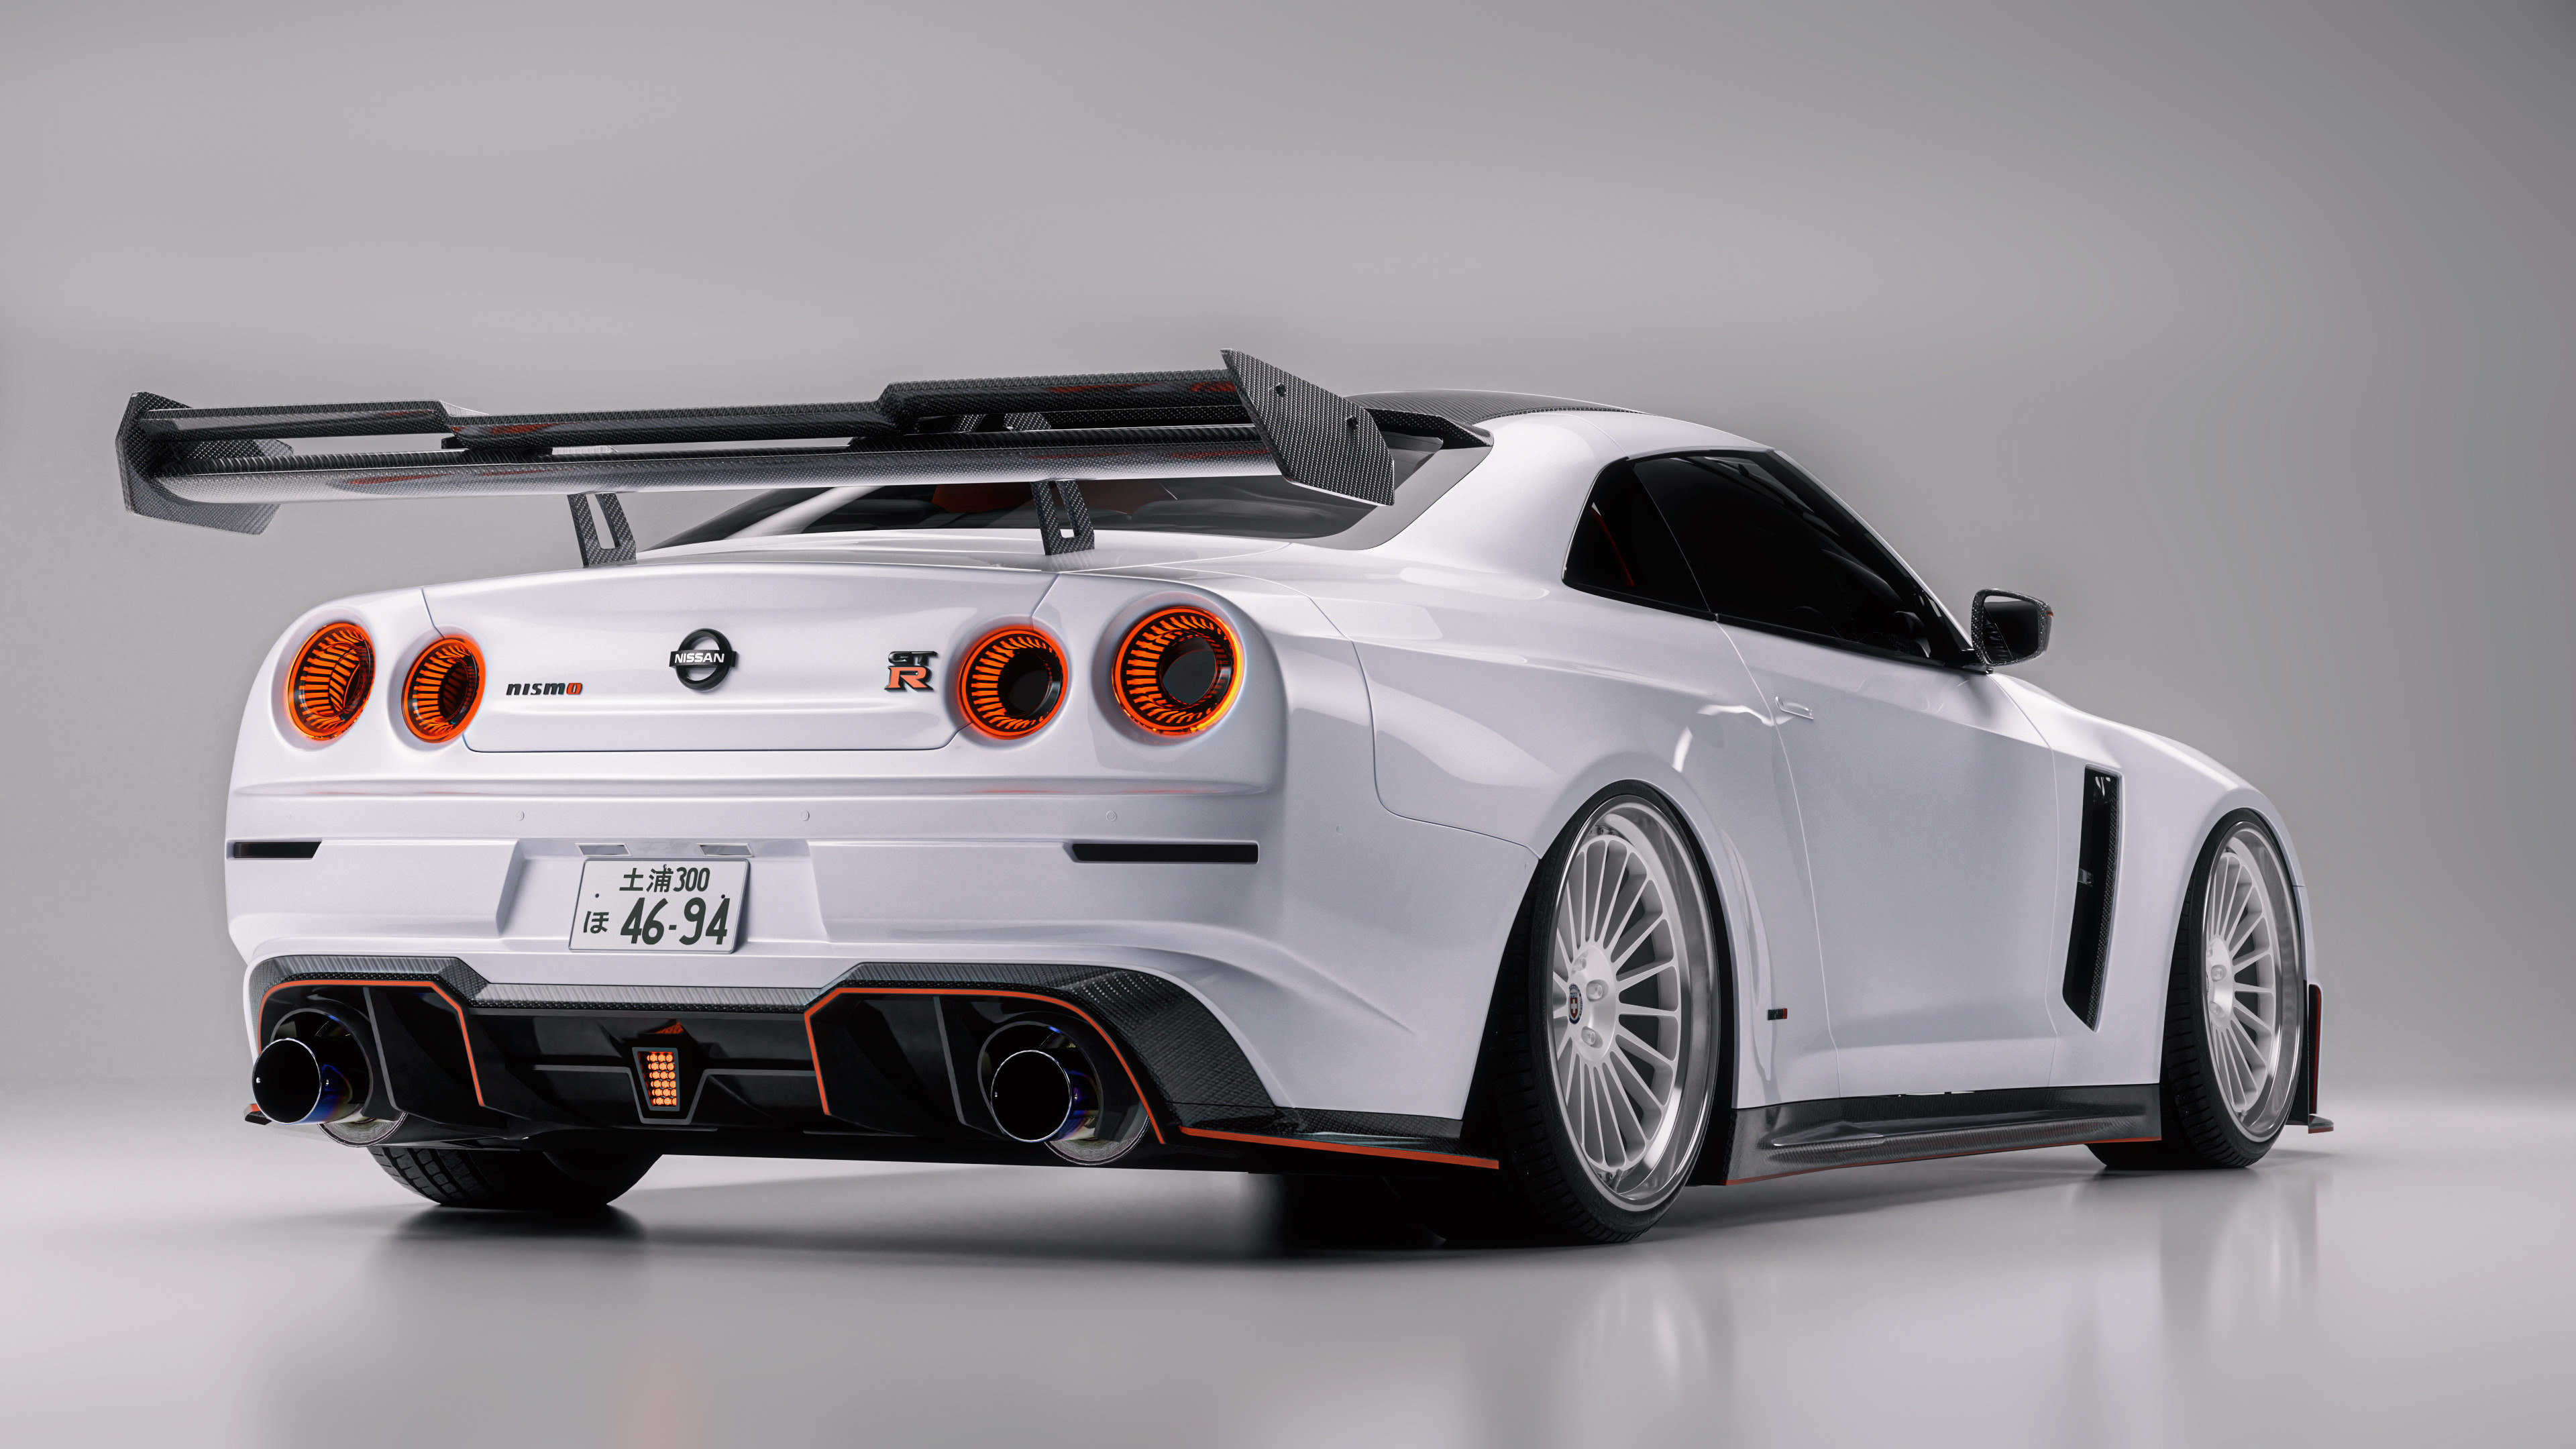 Nissan GT-R R34 Concept GT-R R36 Widebody | 3D model